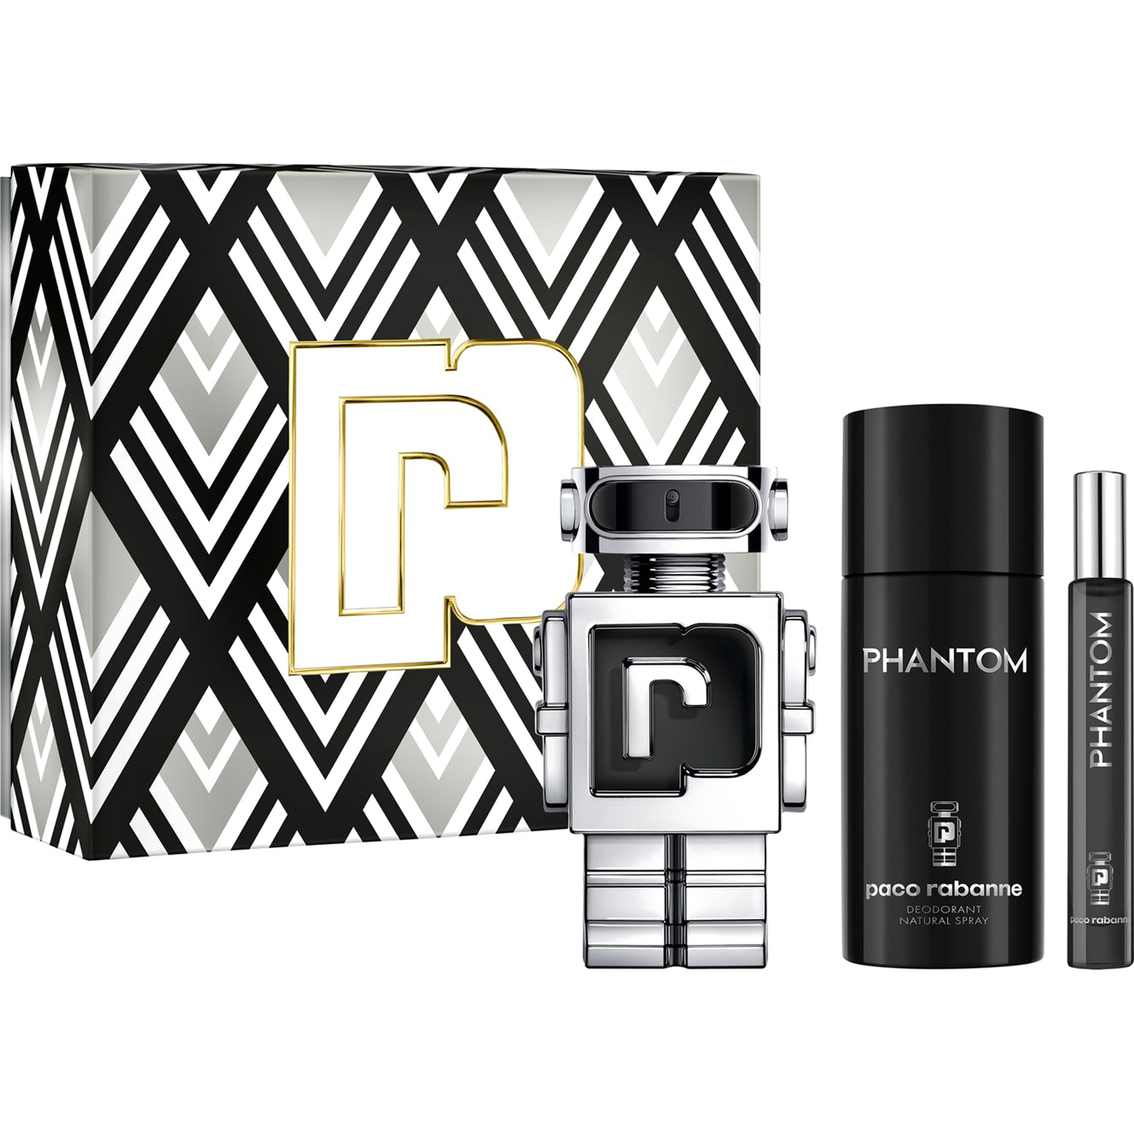 Rabanne Phantom Eau De Parfum 3 Pc. Gift Set | Gifts Sets For Him ...